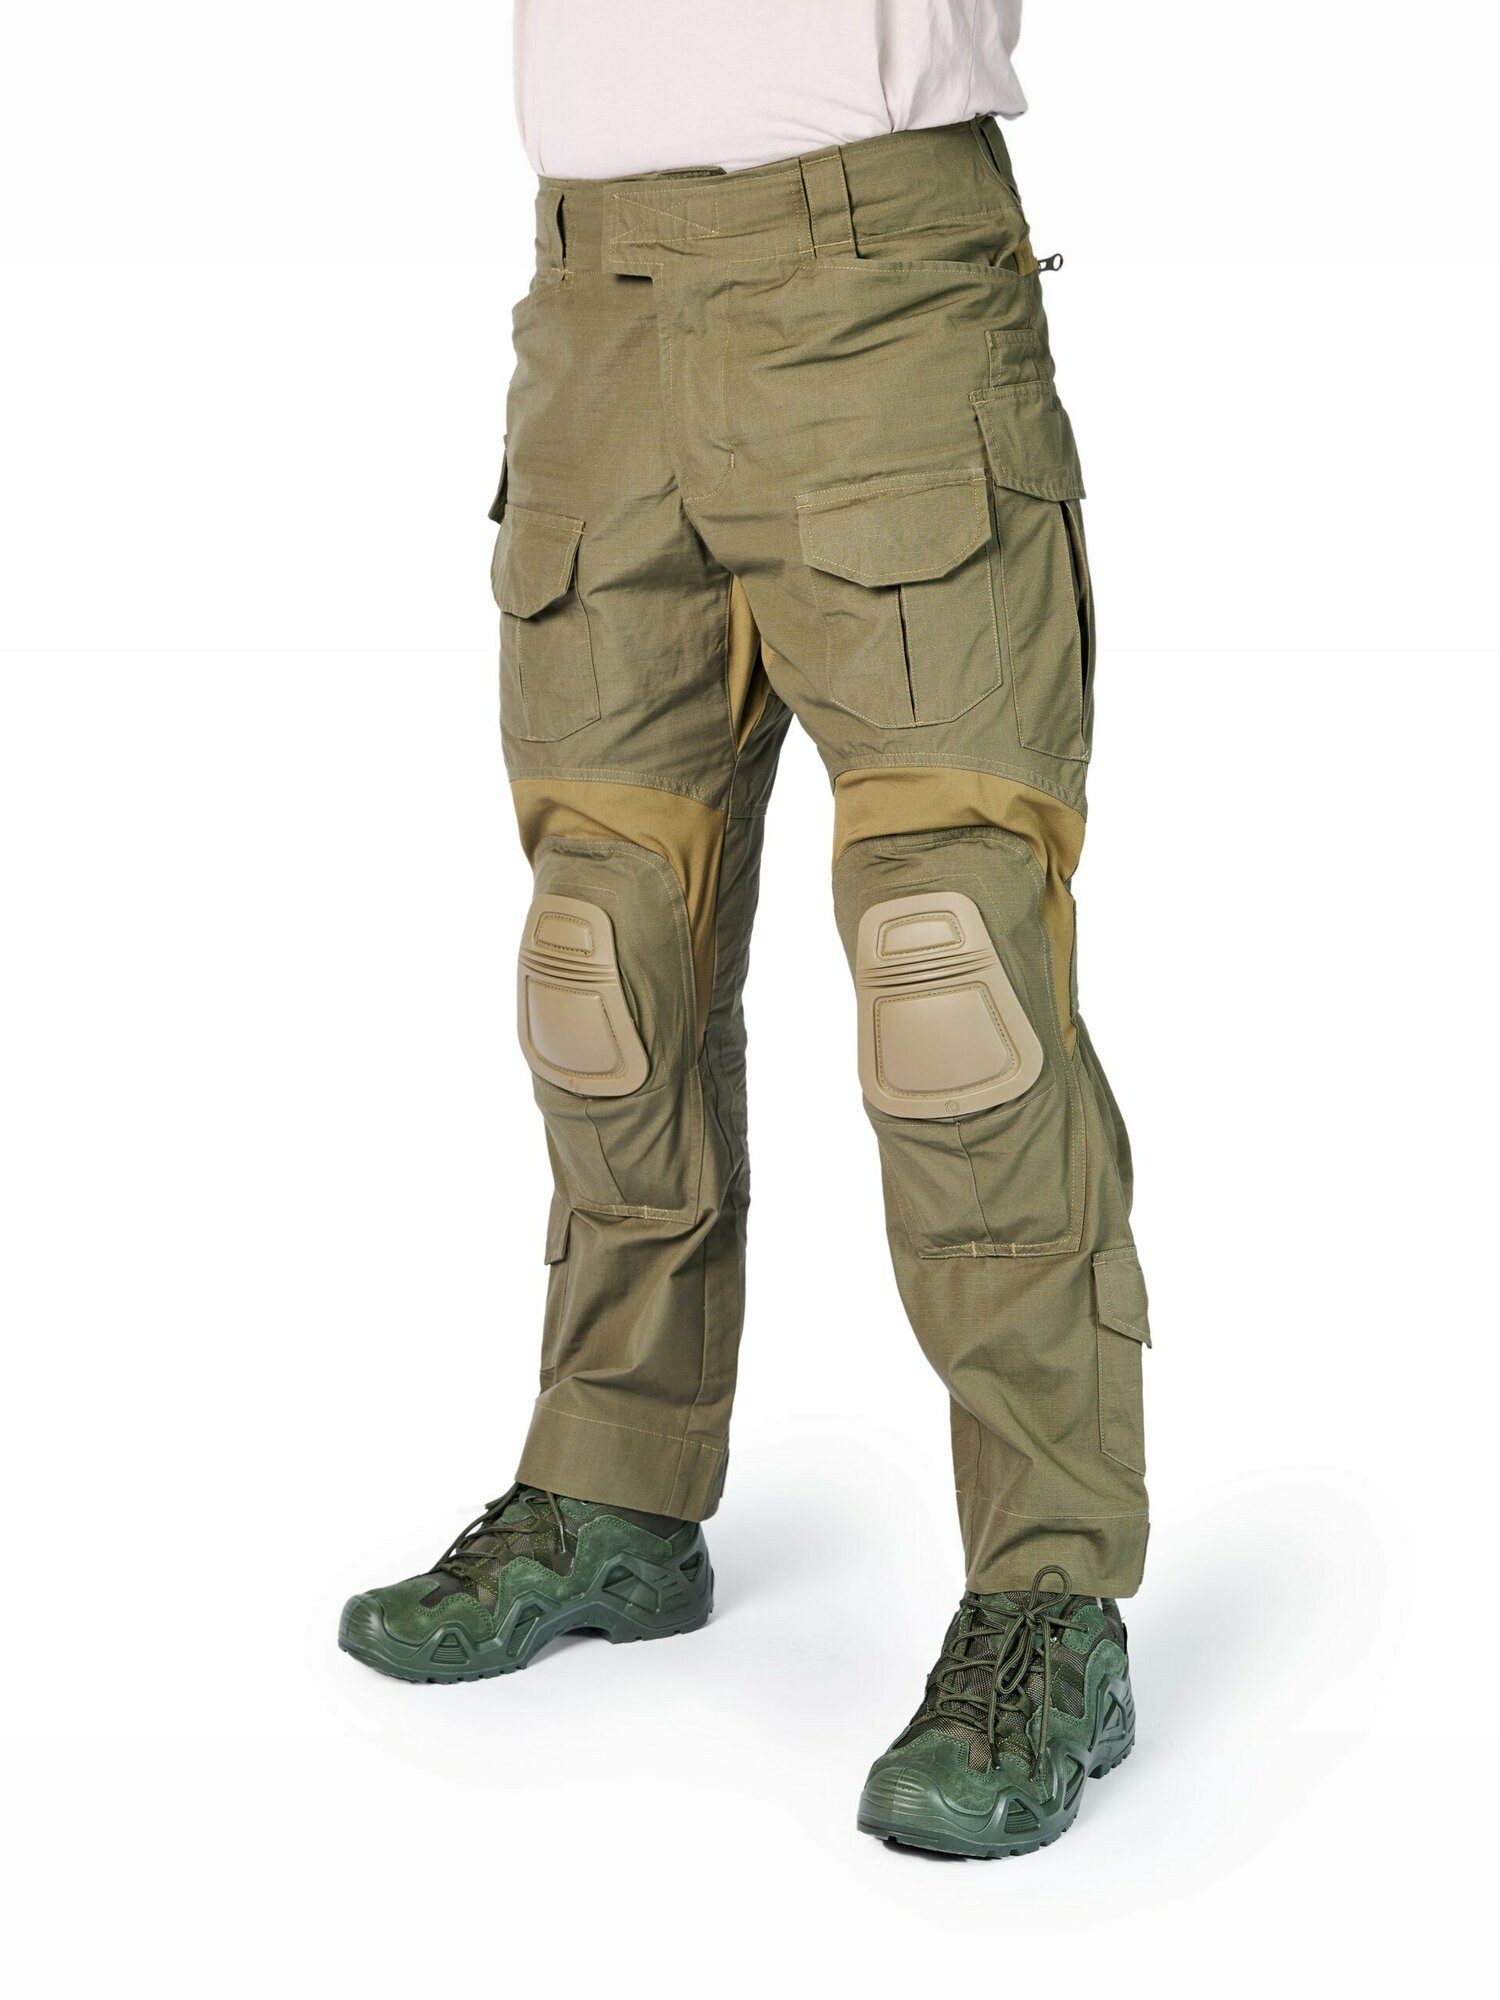 Штаны боевые Emerson G3 Tactical Pants (Олива) 46 размер